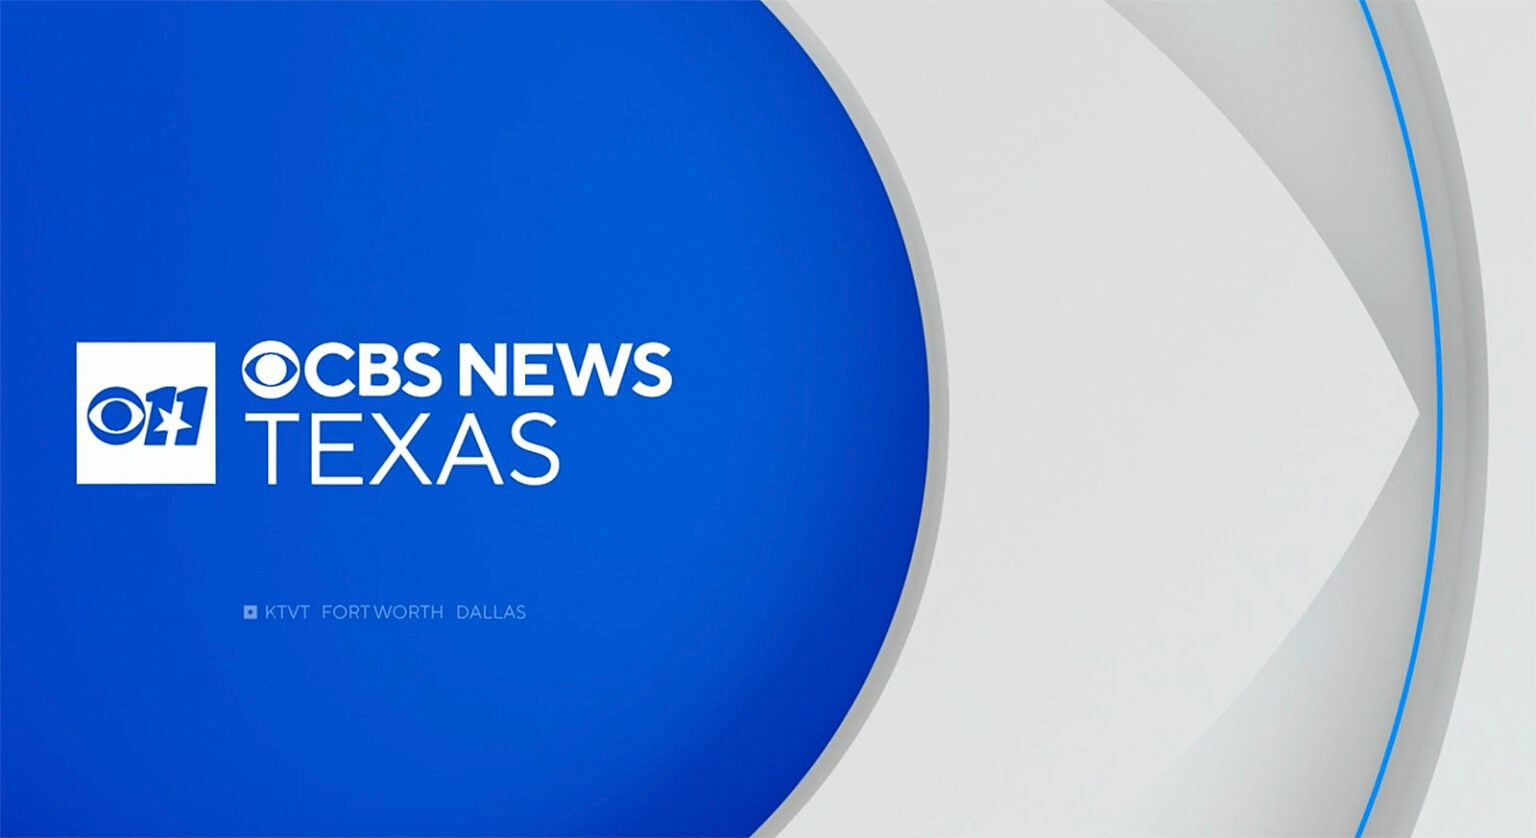 Ktvt Dallas Cbs Rebranding Leans Into Texas Identity Tv News Check